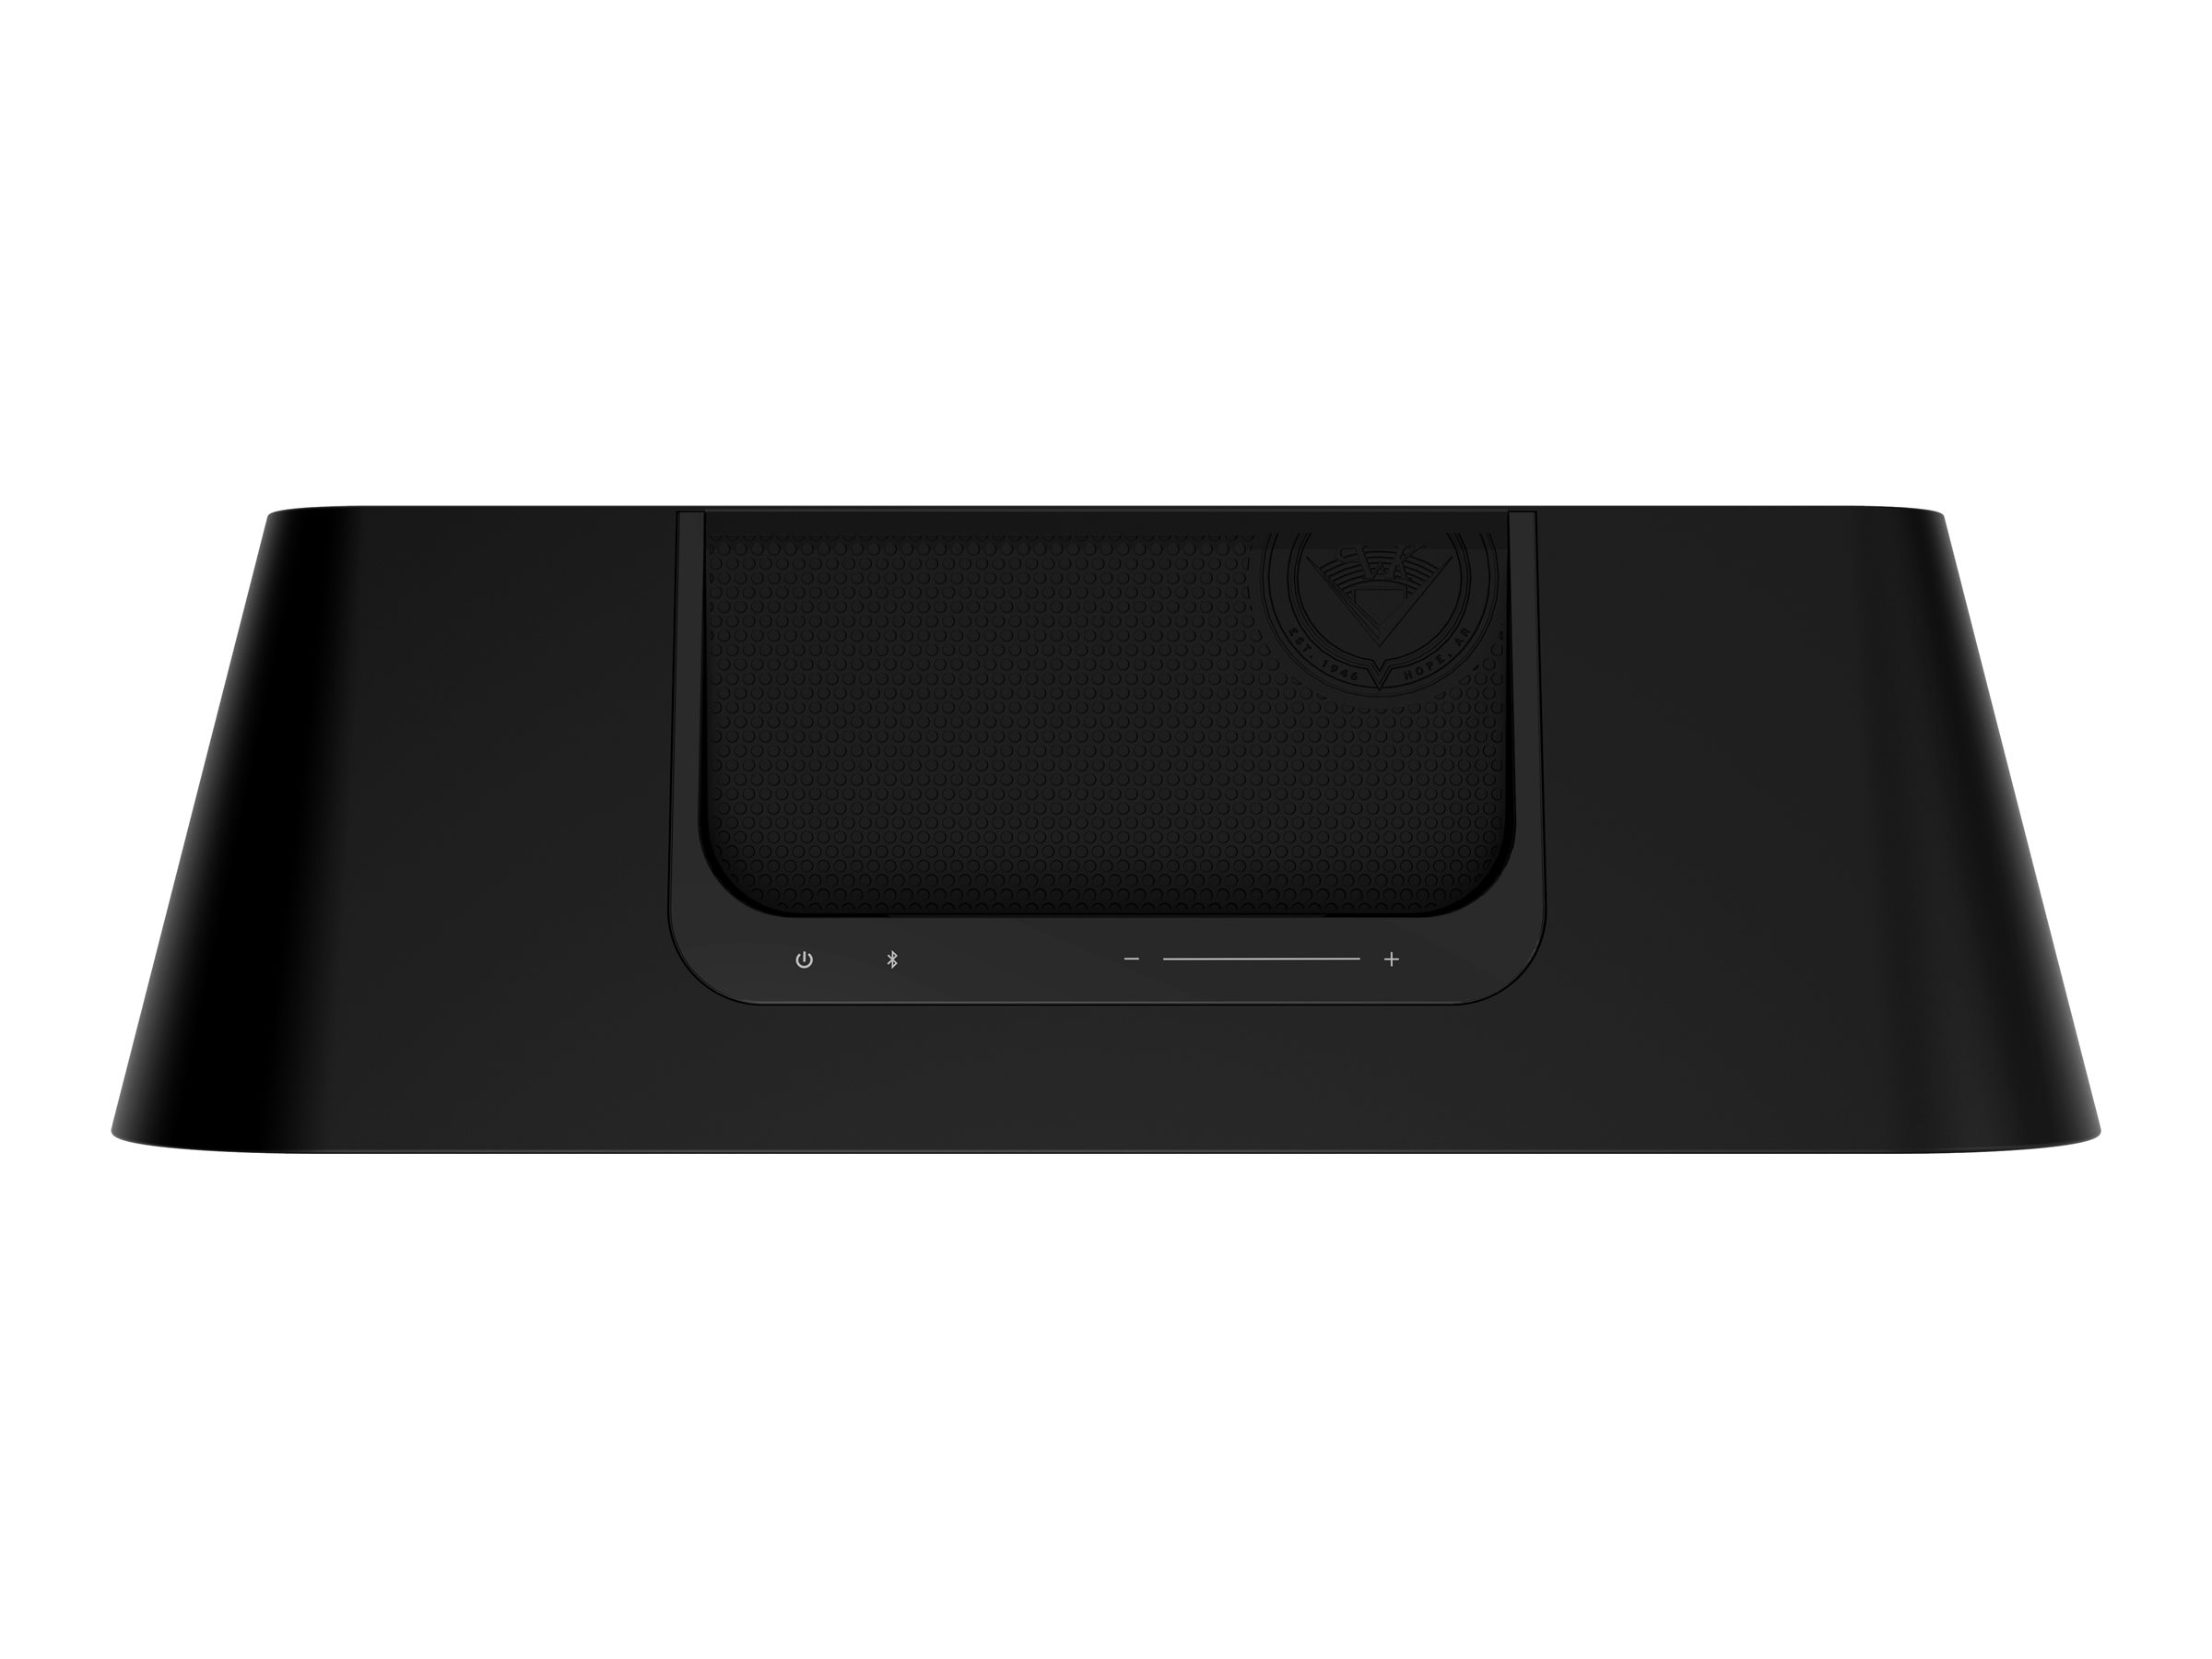 Klipsch Groove XXL Portable Bluetooth Speaker - Black - GROOVEXXL - Open Box or Display Models Only